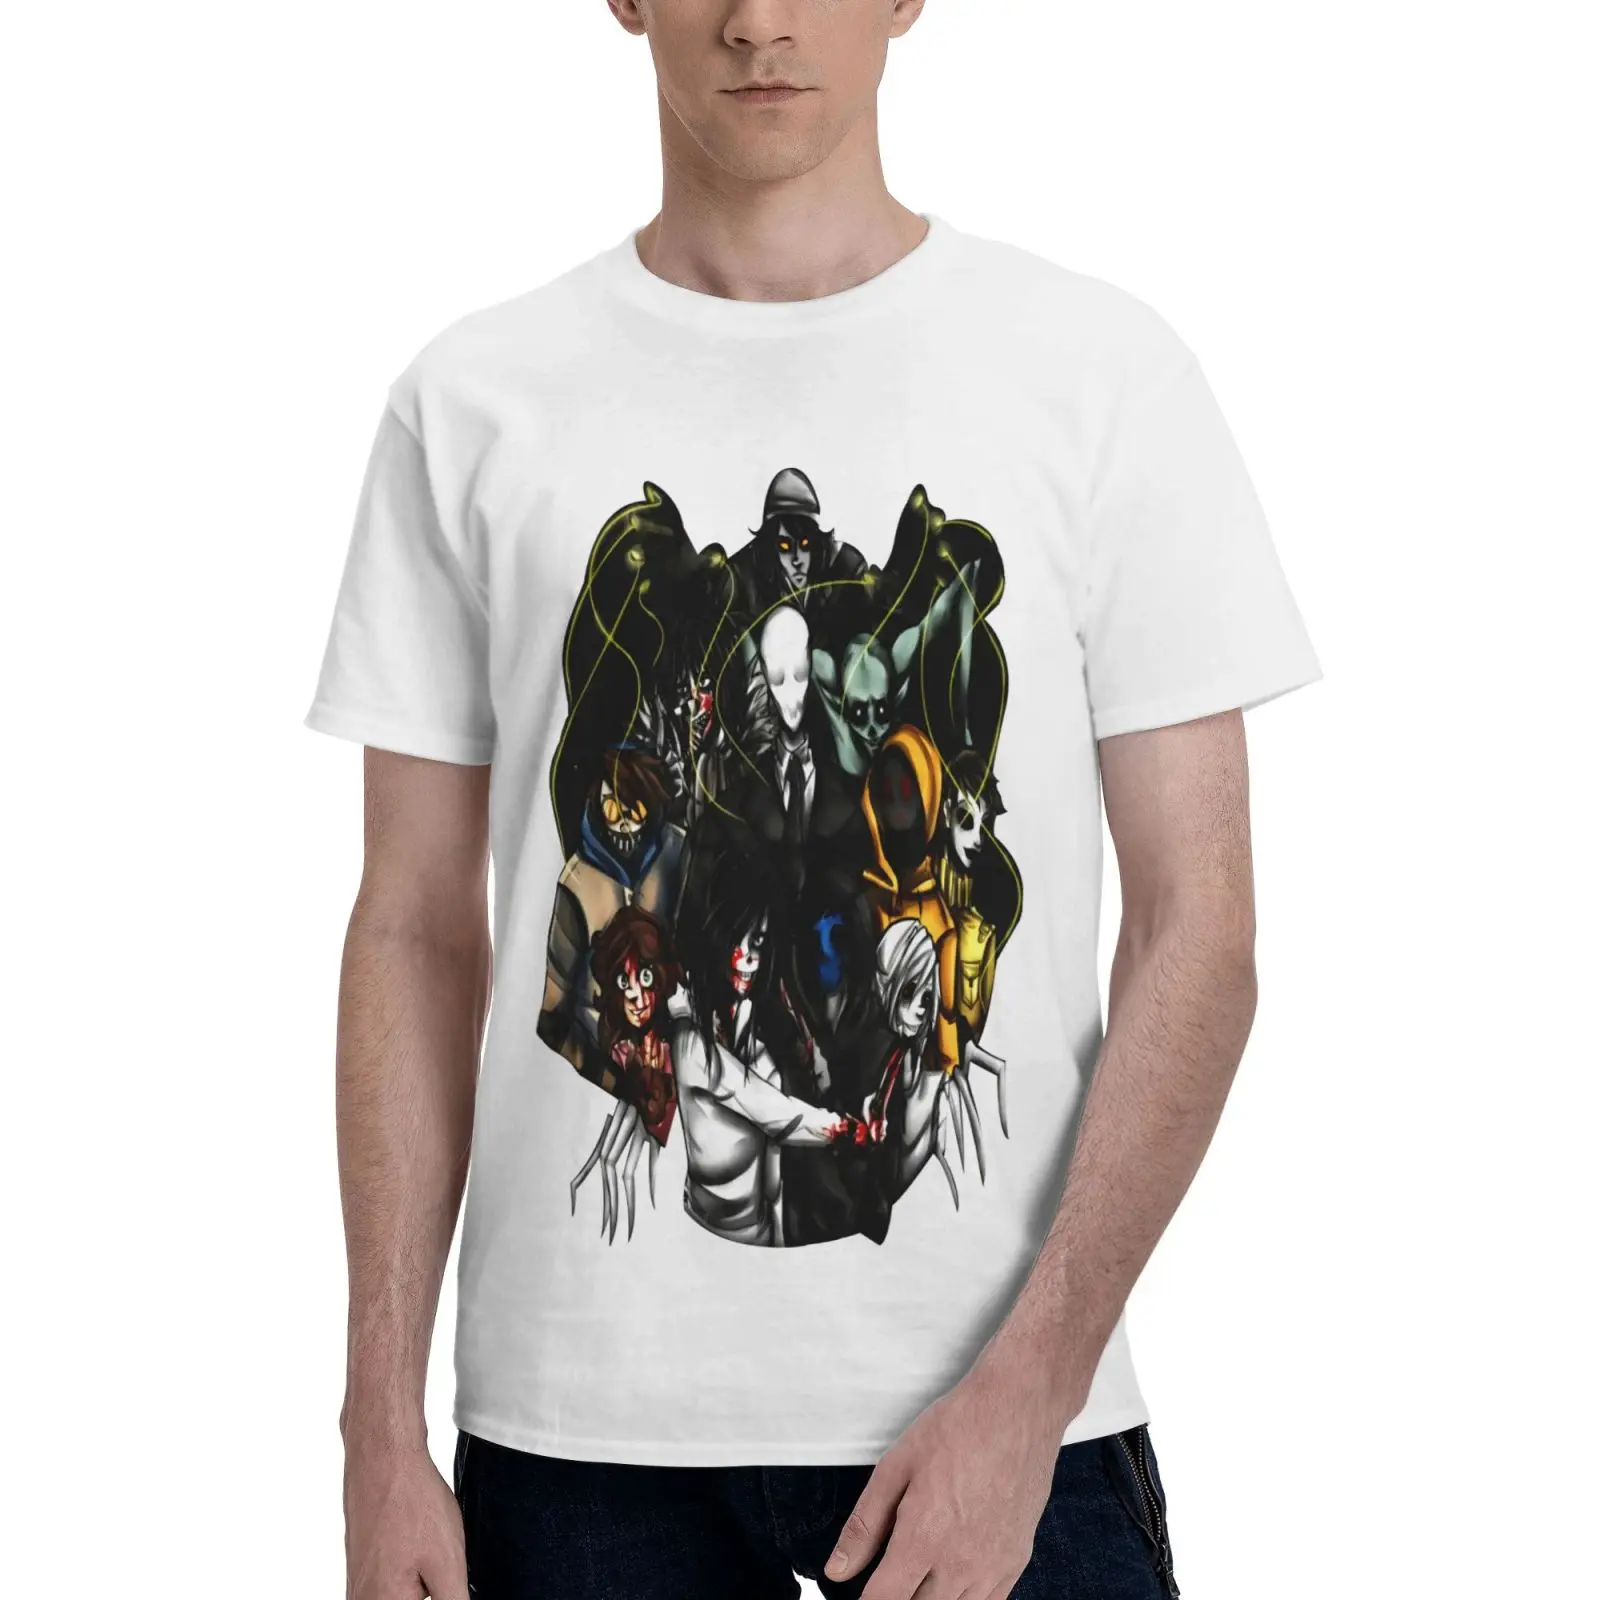 afvoer Antecedent voetstappen Creepypasta Clothes Shirt | Creepypastas Shirts Man | Creepy Shirts Men -  Men T-shirt - Aliexpress